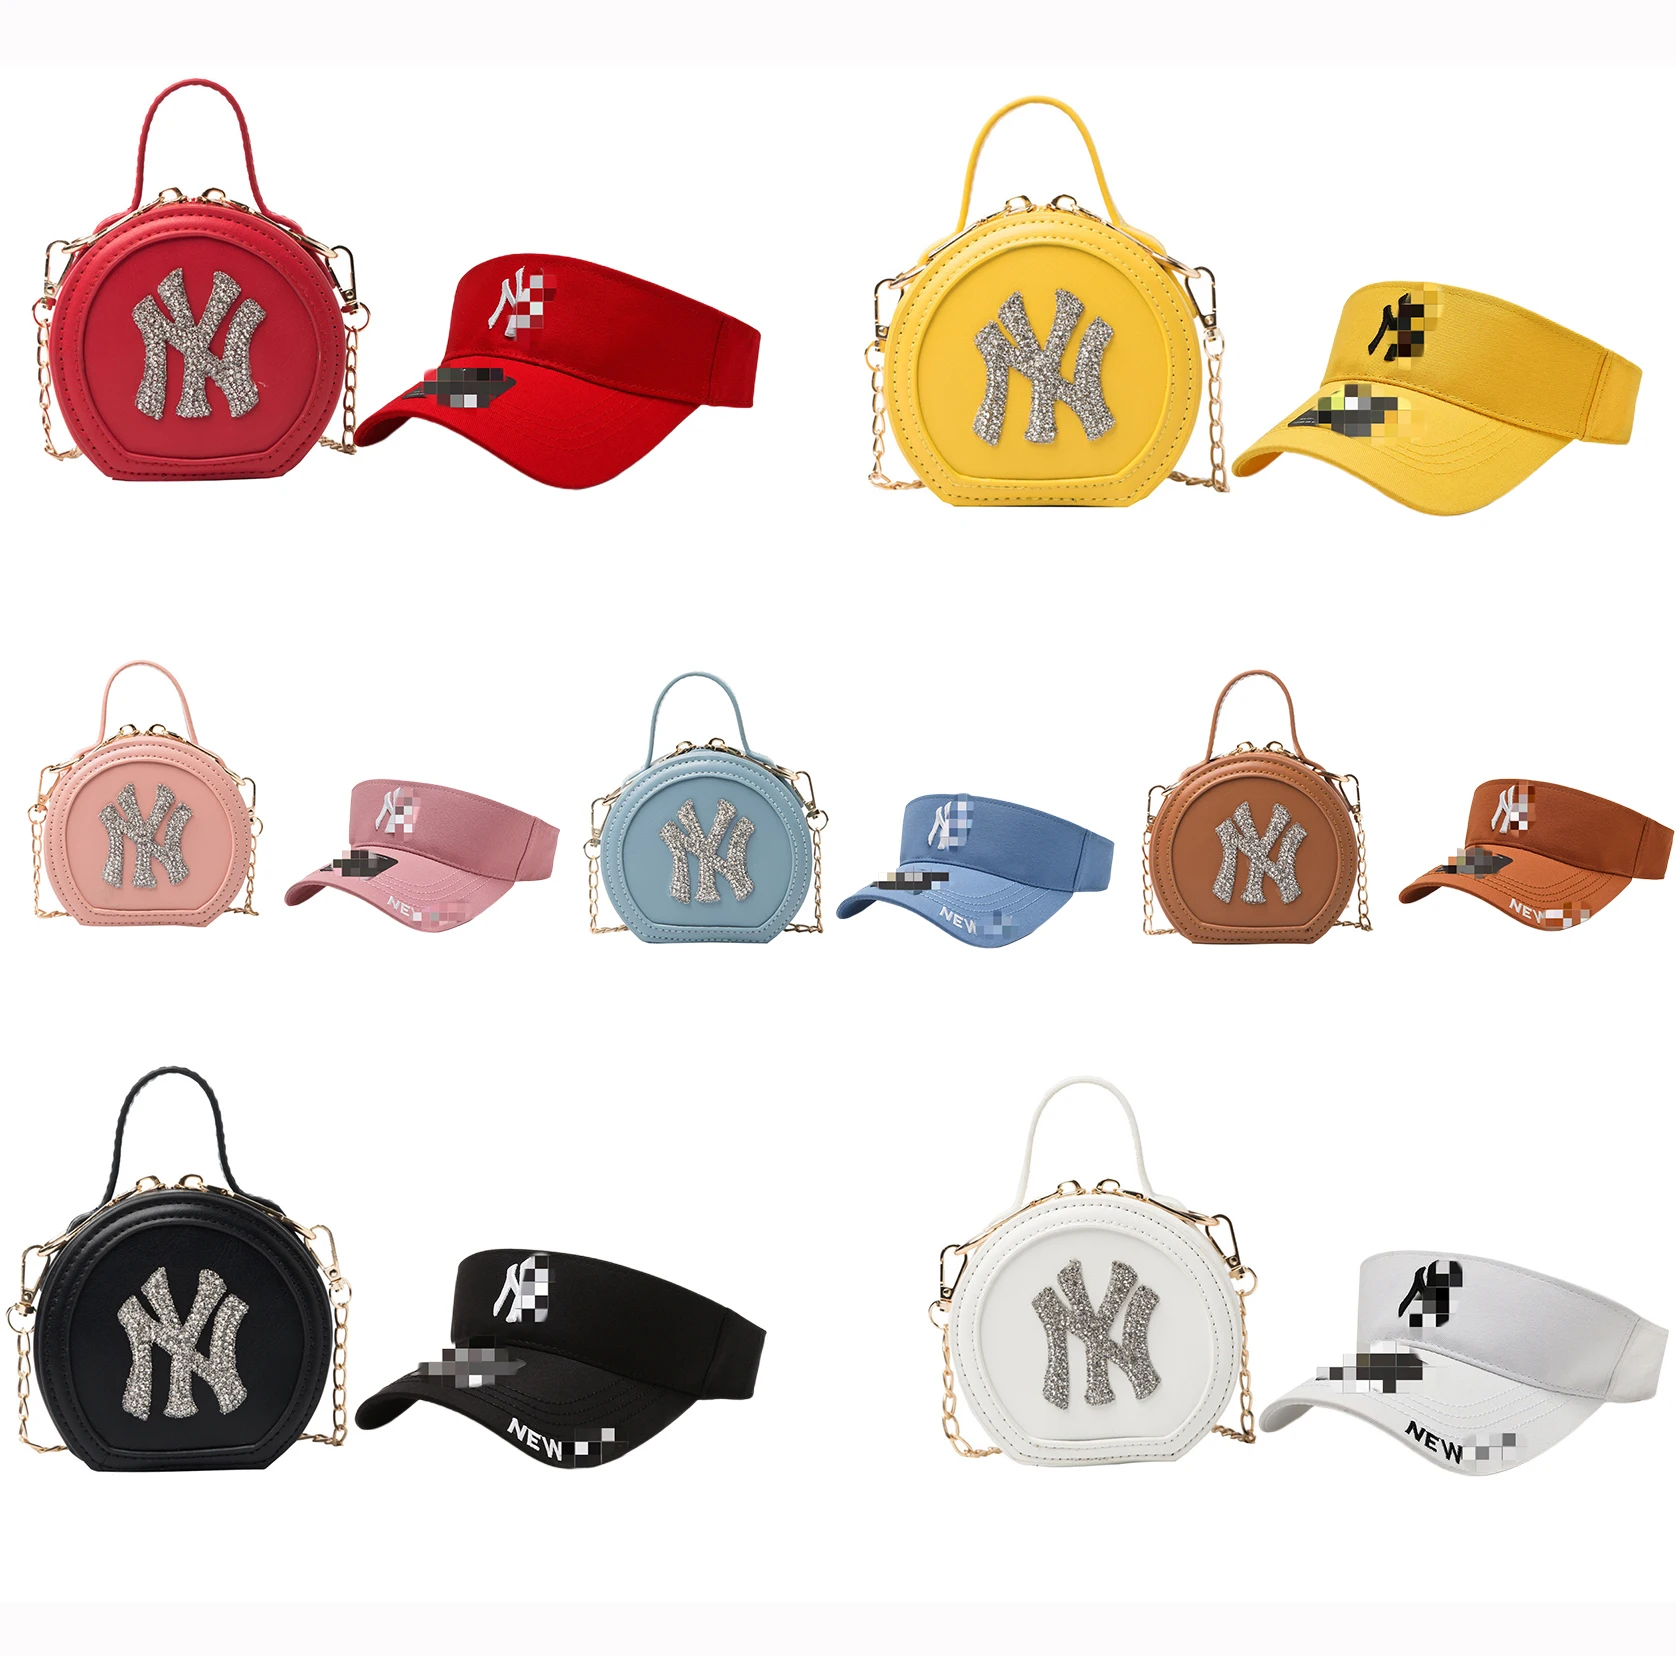 

Wholesale girls mini purse rhinestone NY lipstick cute messenger bag trendy women coin purse and visor hat set, 7 color available